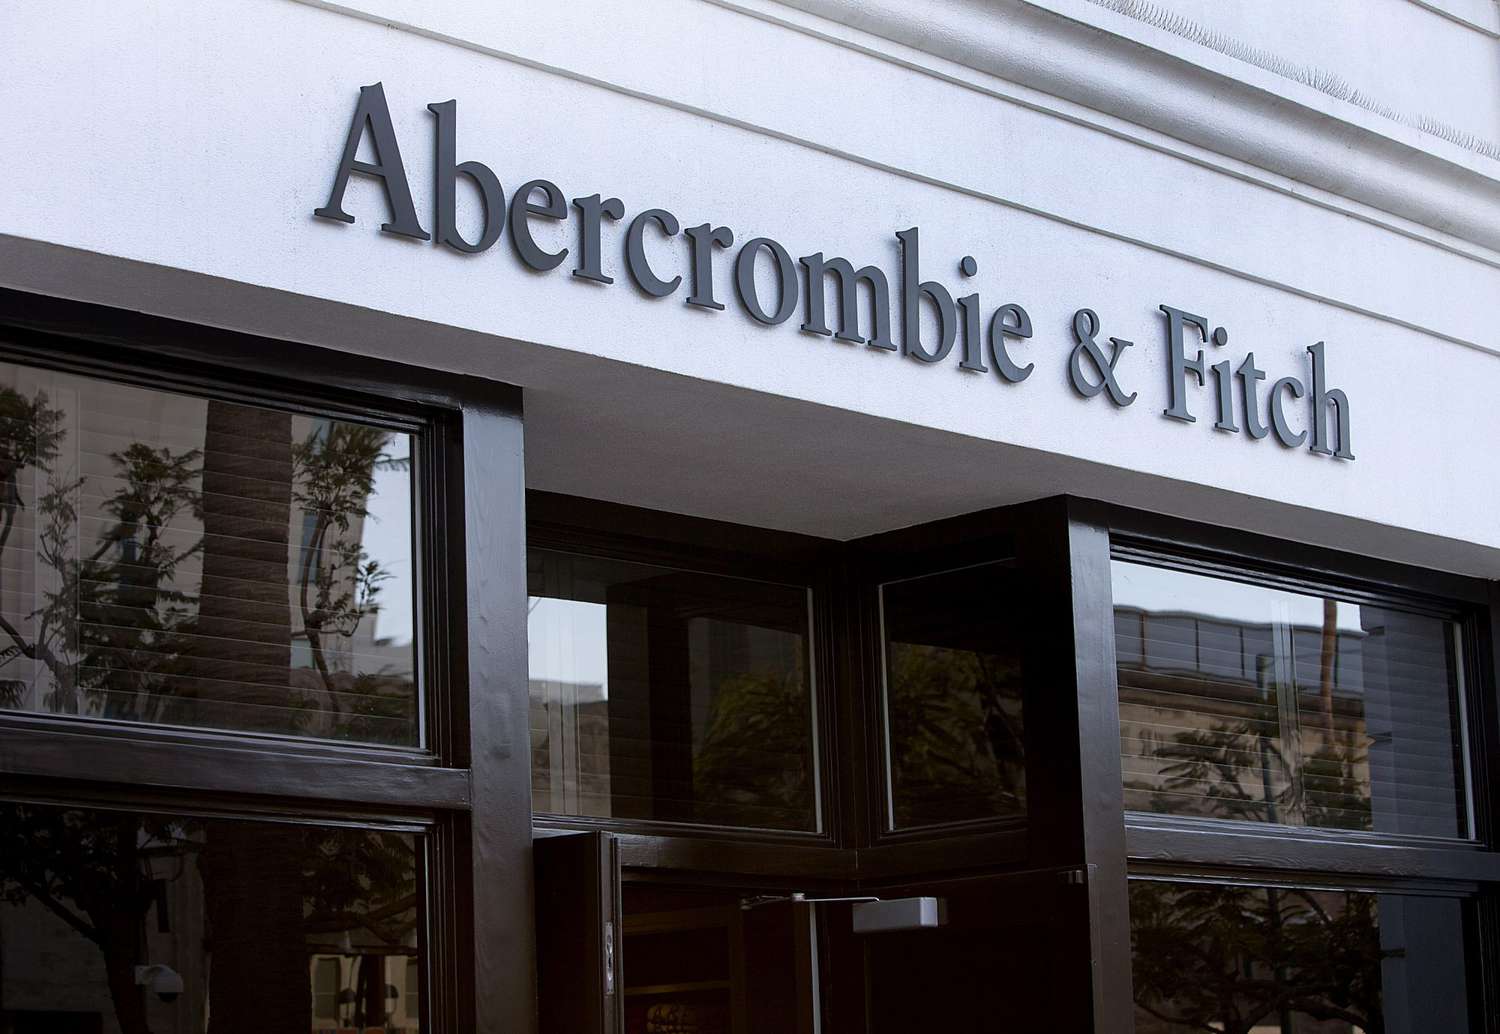 Abercrombie & Fitch: Ο πρώην CEO του οίκου μόδας κατηγορείται για σεξουαλική εκμετάλλευση ανδρών